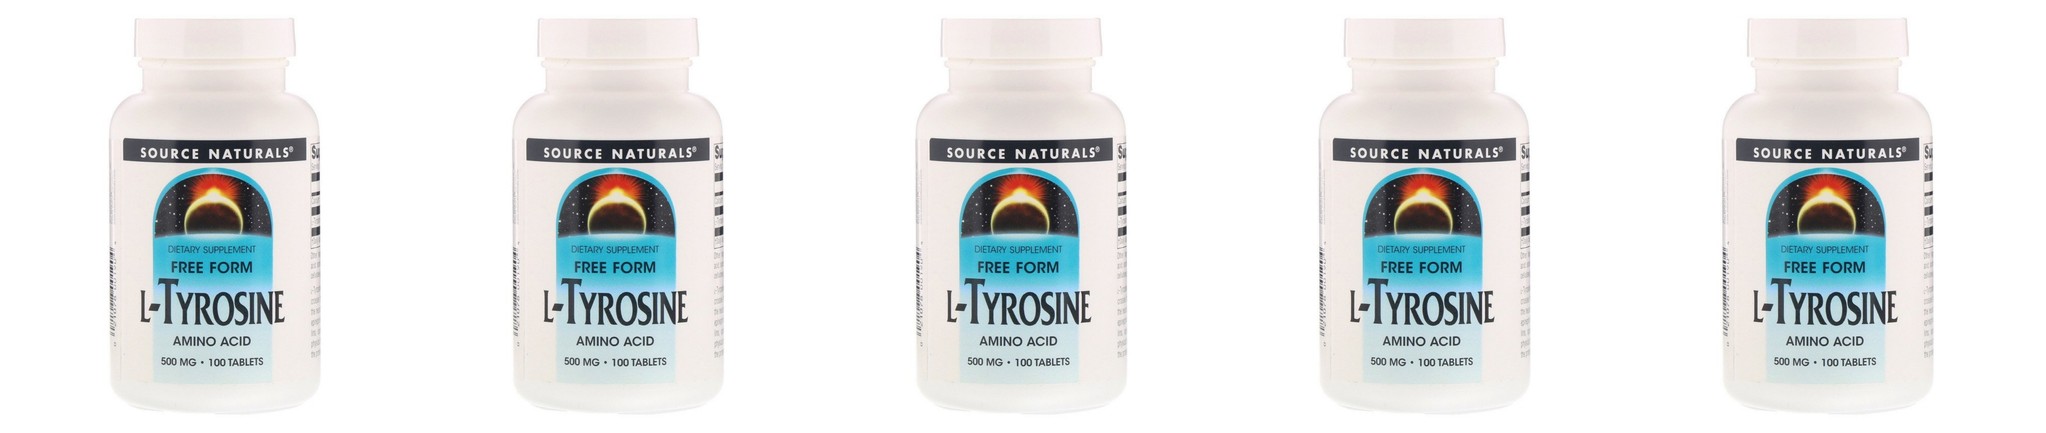 Source Naturals L-Tyrosine, 500 Mg 100 Tablets, 5-pack